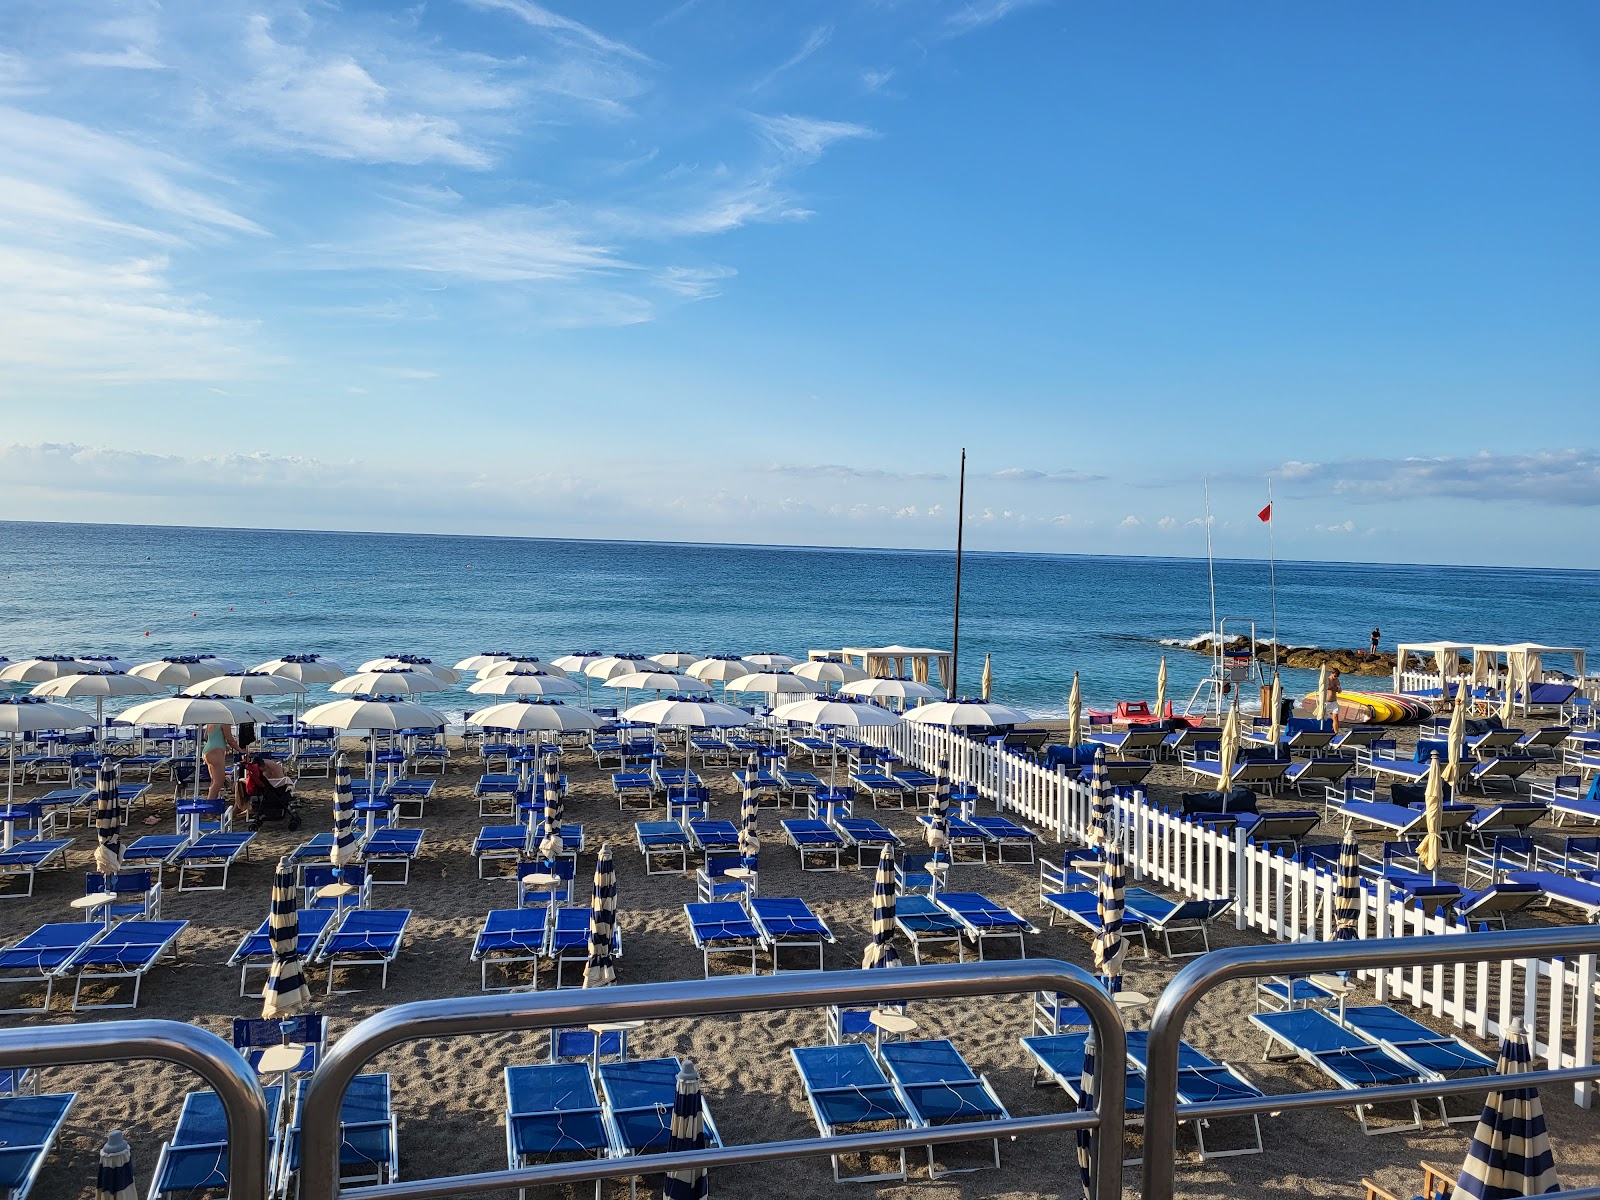 Foto de Spiaggia di Don Giovanni Bado - lugar popular entre os apreciadores de relaxamento